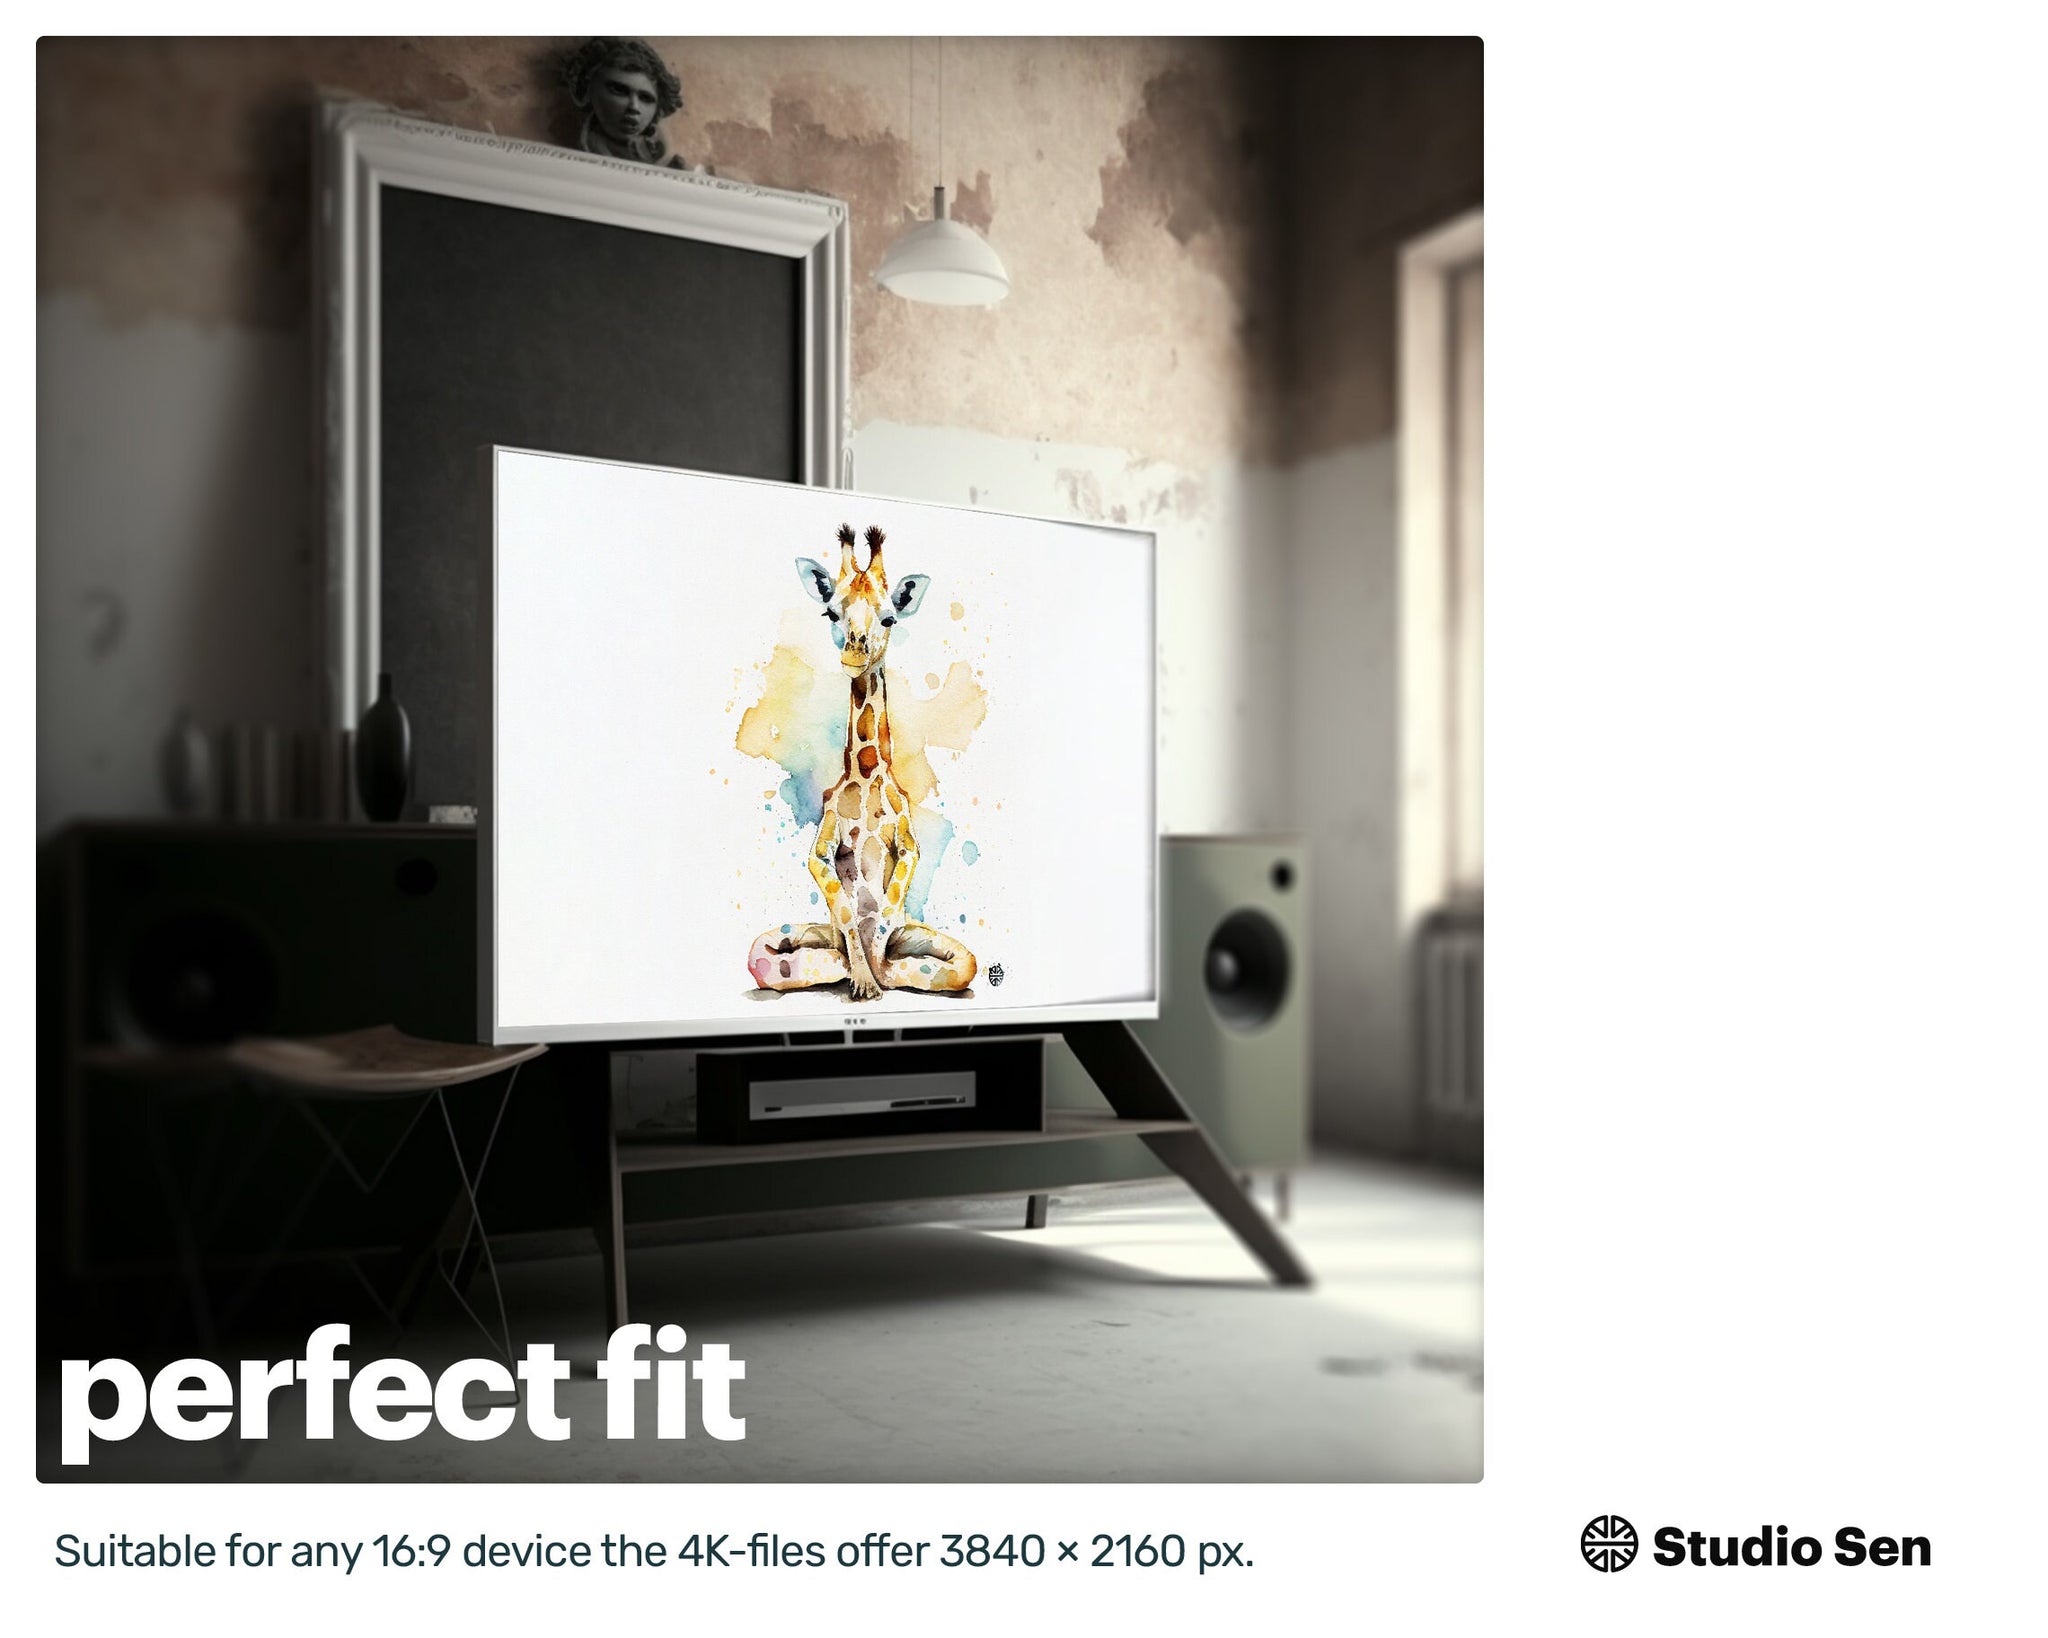 Samsung Art TV, Yoga Giraffe, premium download, drops and splashes, friendly wallpaper, art for kids